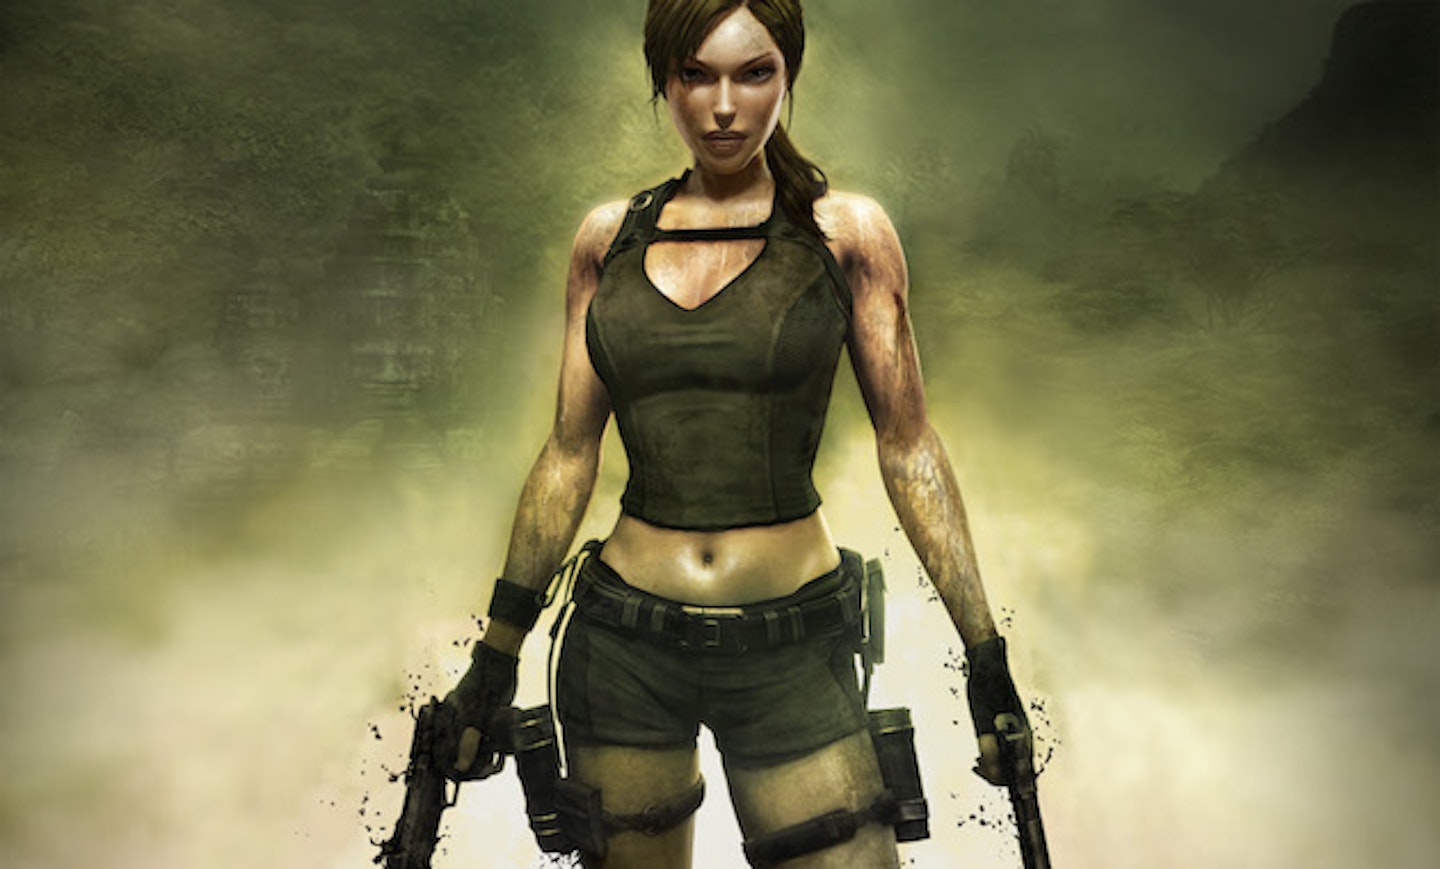 Lara Croft: Tomb Raider review